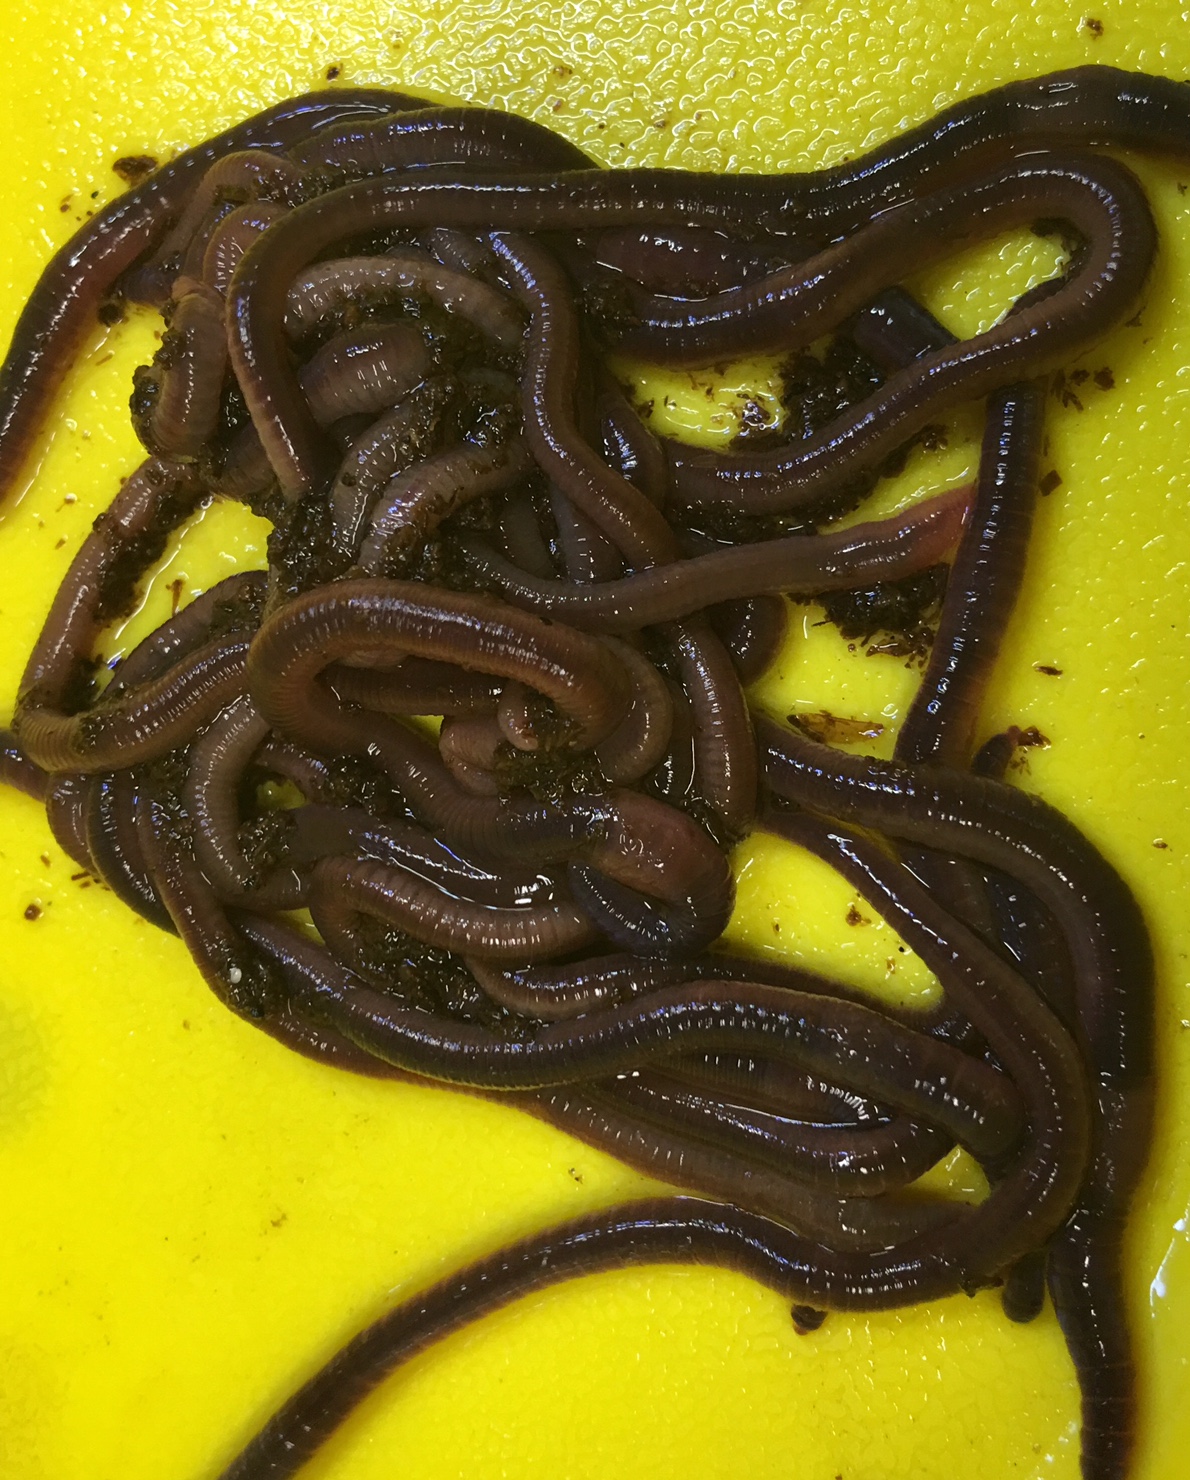 Malaysian blue earthworm (Perionyx Excavatus)